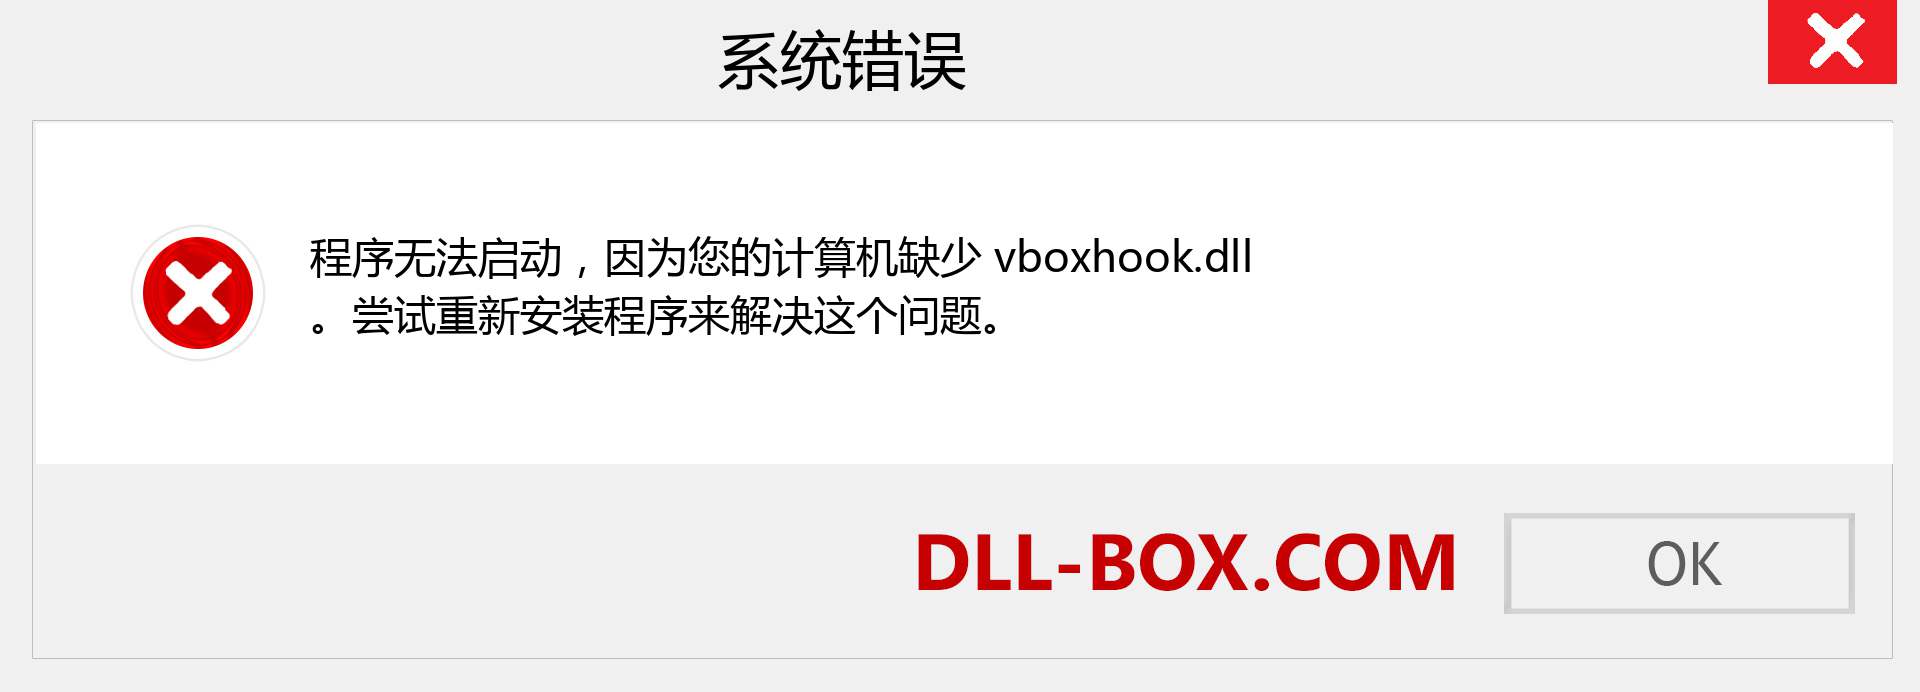 vboxhook.dll 文件丢失？。 适用于 Windows 7、8、10 的下载 - 修复 Windows、照片、图像上的 vboxhook dll 丢失错误